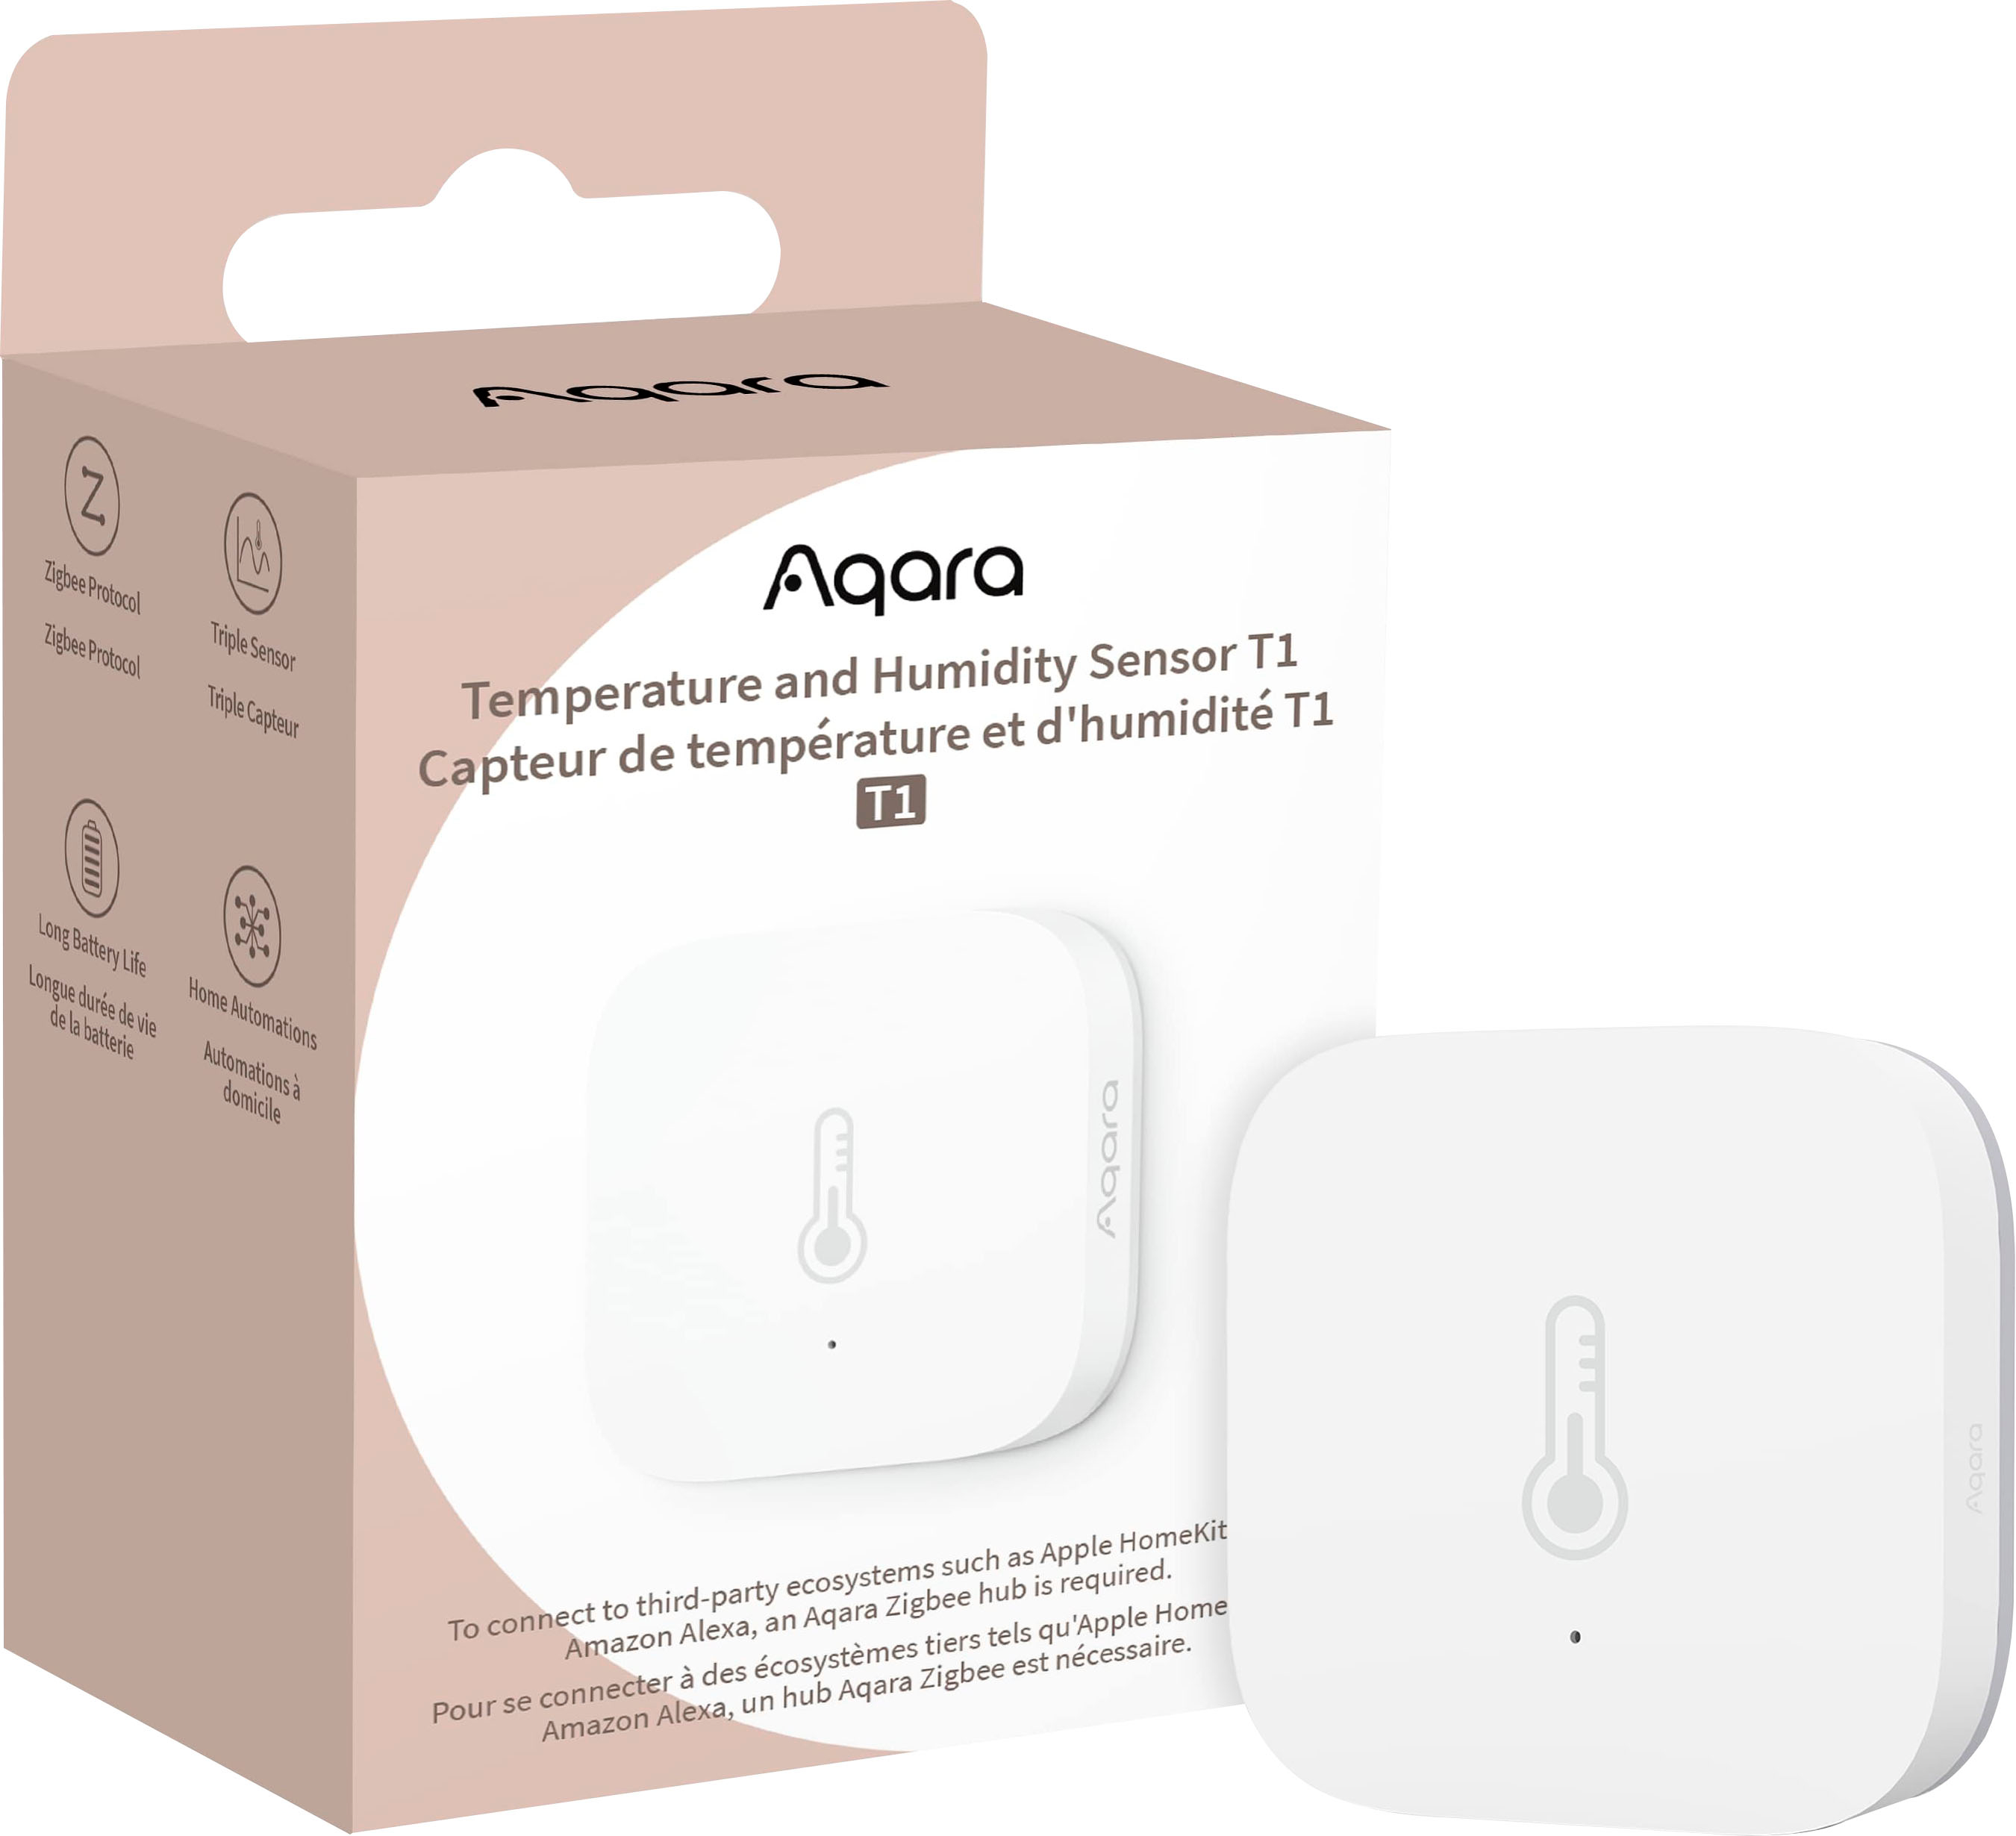 Aqara - Zigbee 3.0 Temperature and humidity sensor T1